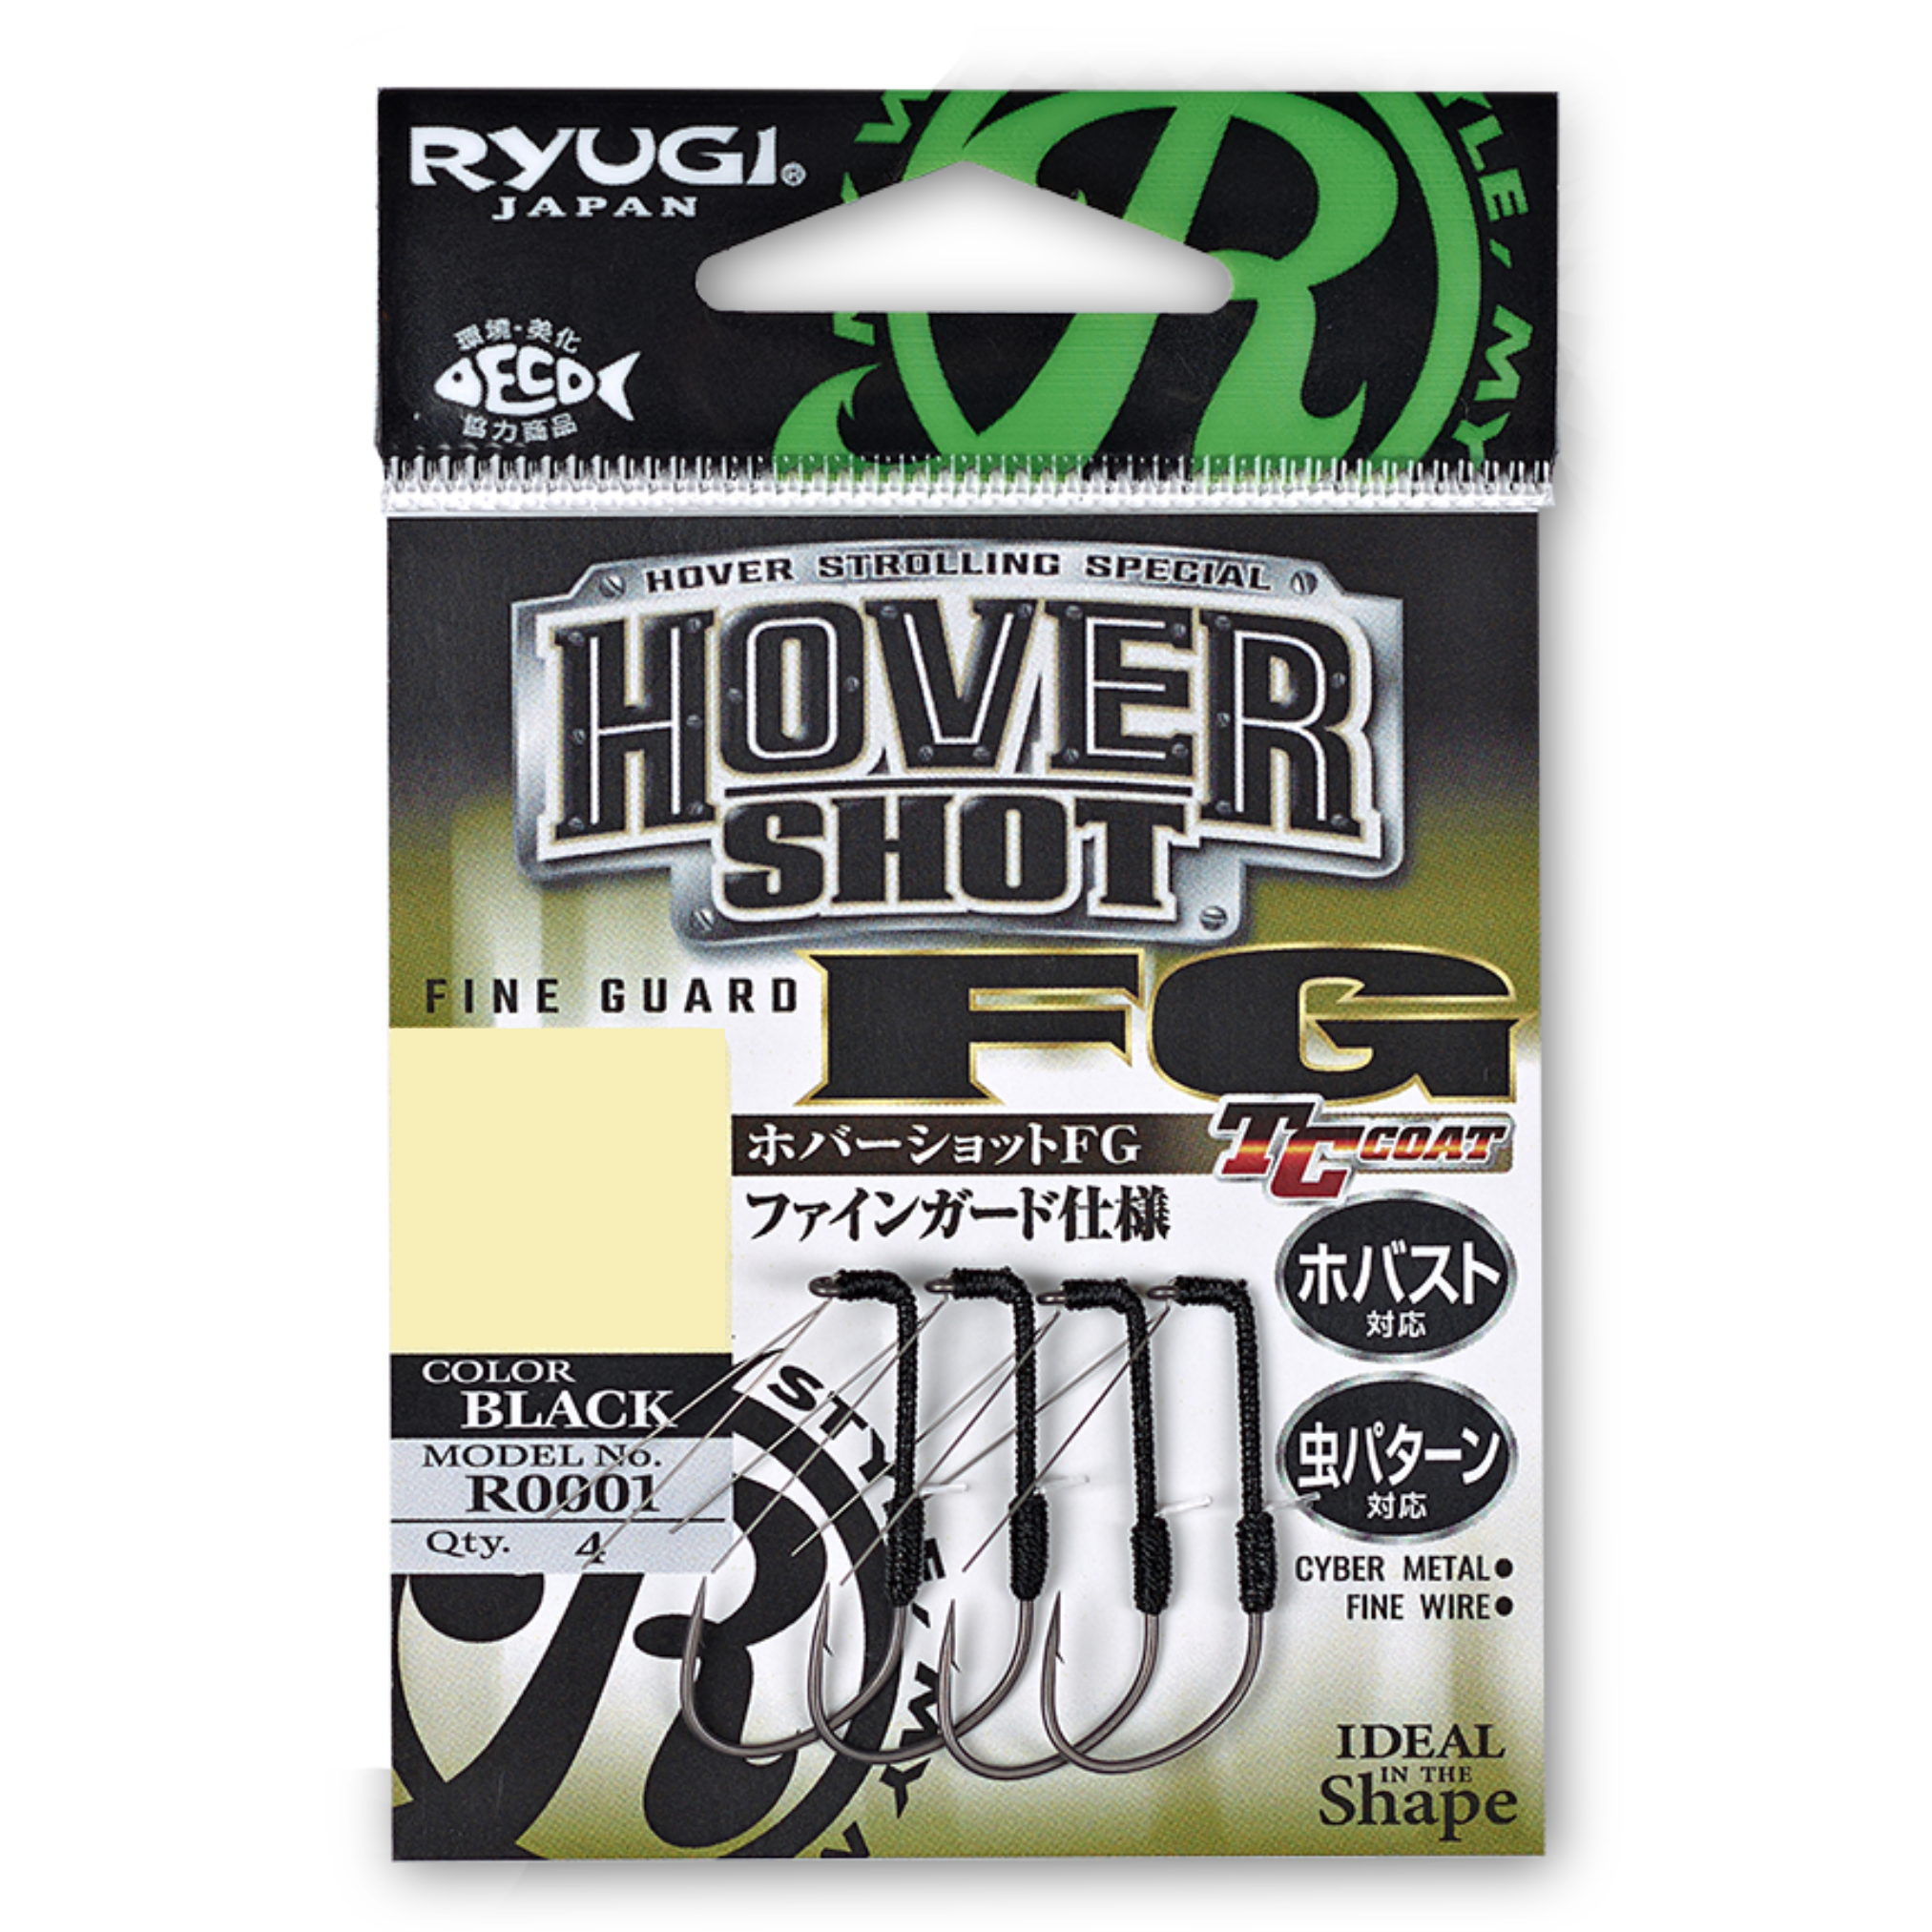 Ryugi Hover Shot FG Hook Size 2